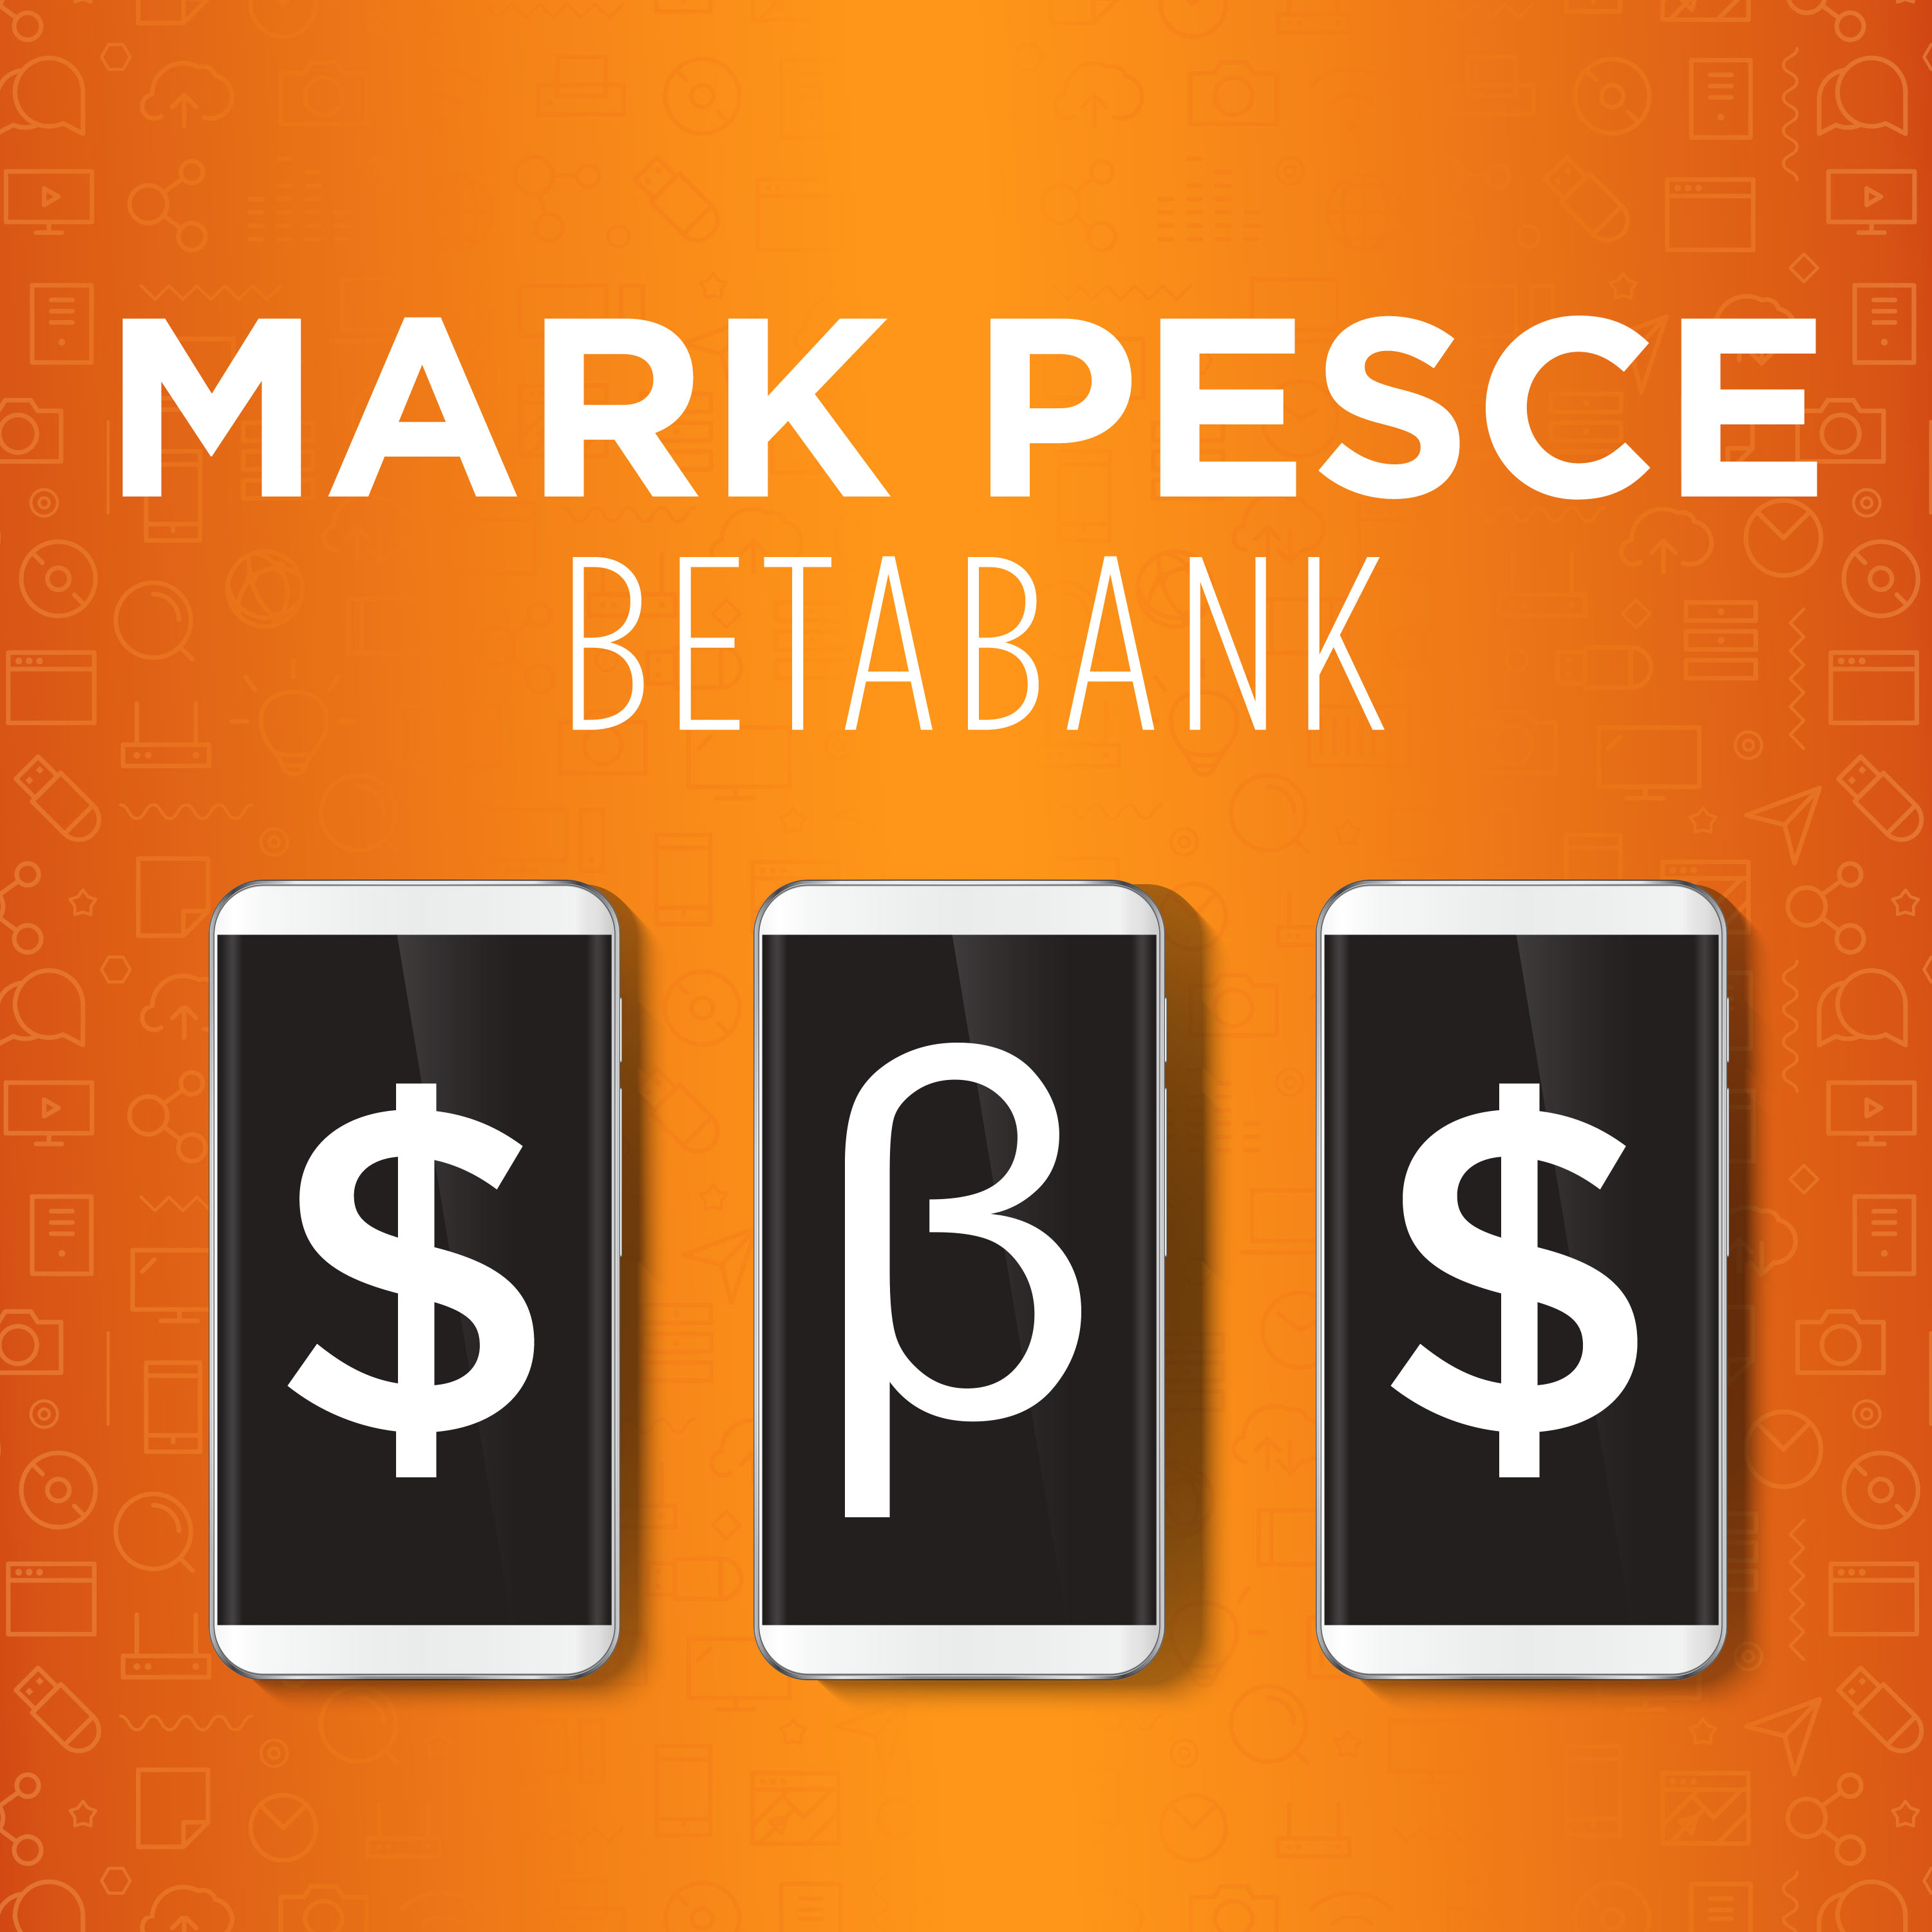 Betabank - The World’s Bank